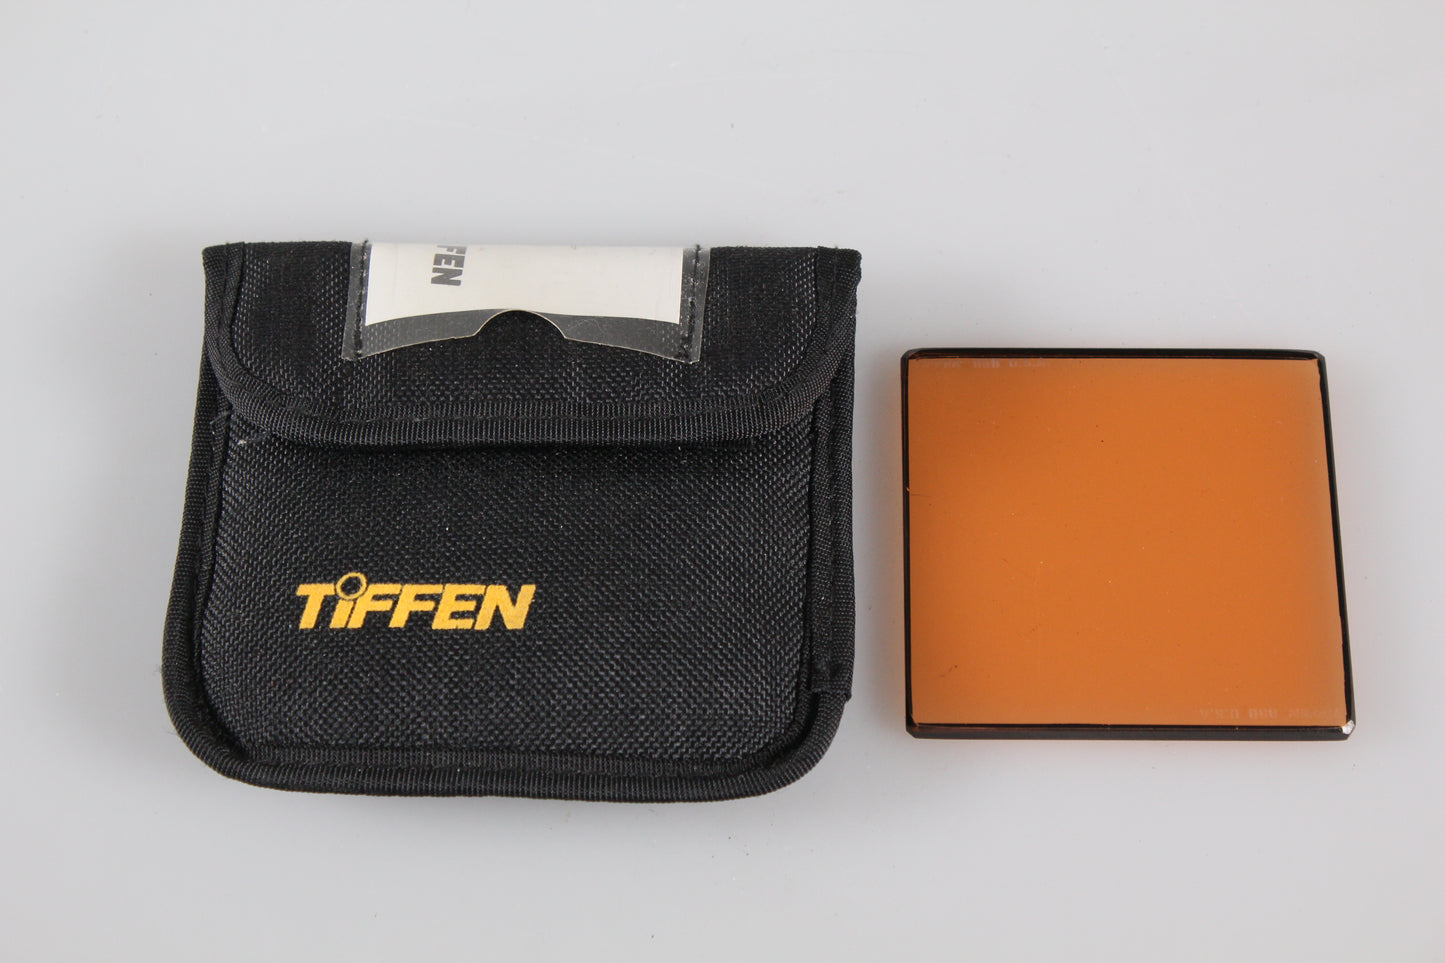 Tiffen 2x2" inch 85B Filter square filter